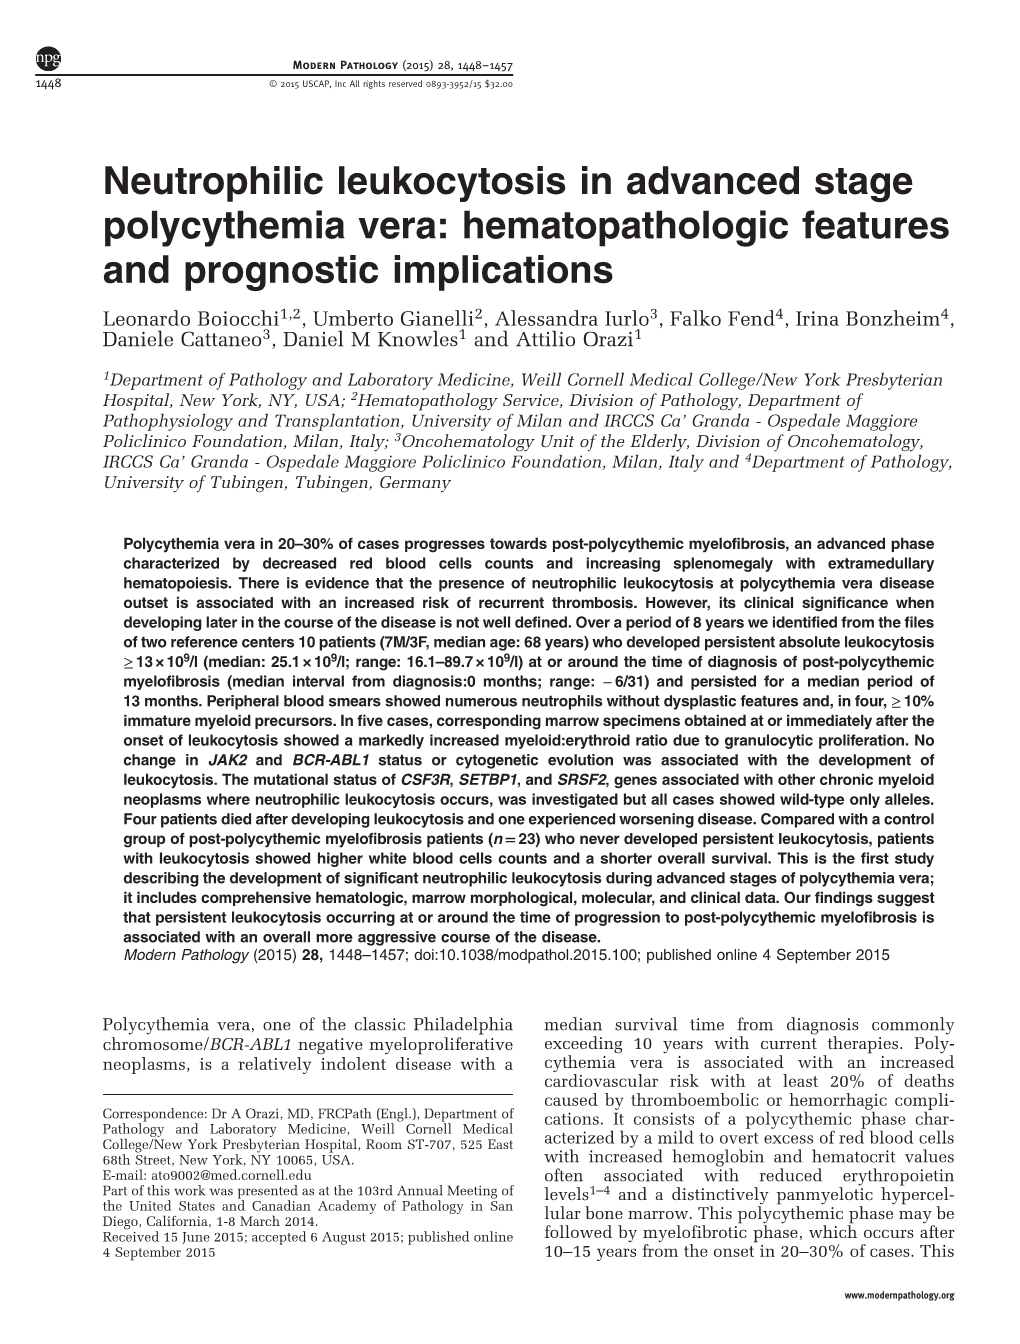 Neutrophilic Leukocytosis in Advanced Stage Polycythemia Vera